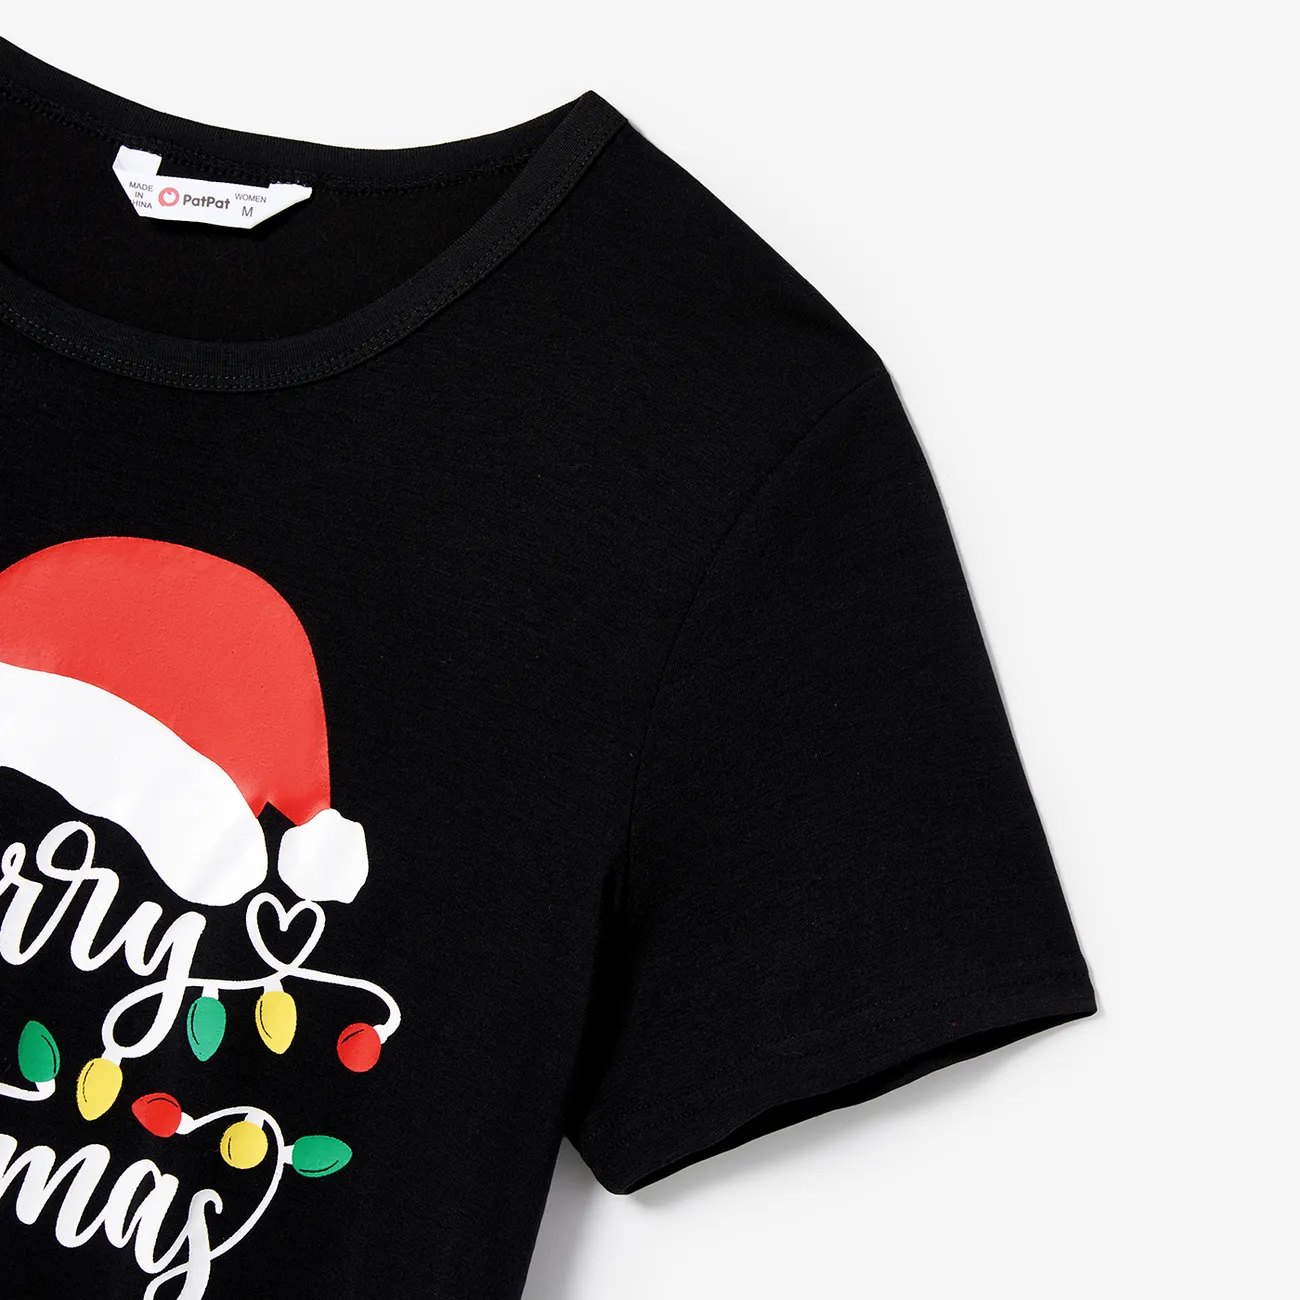 Christmas Family Matching Letter &Festive light bulb Print Short-sleeve Pajamas Sets(Flame resistant) Black big image 1